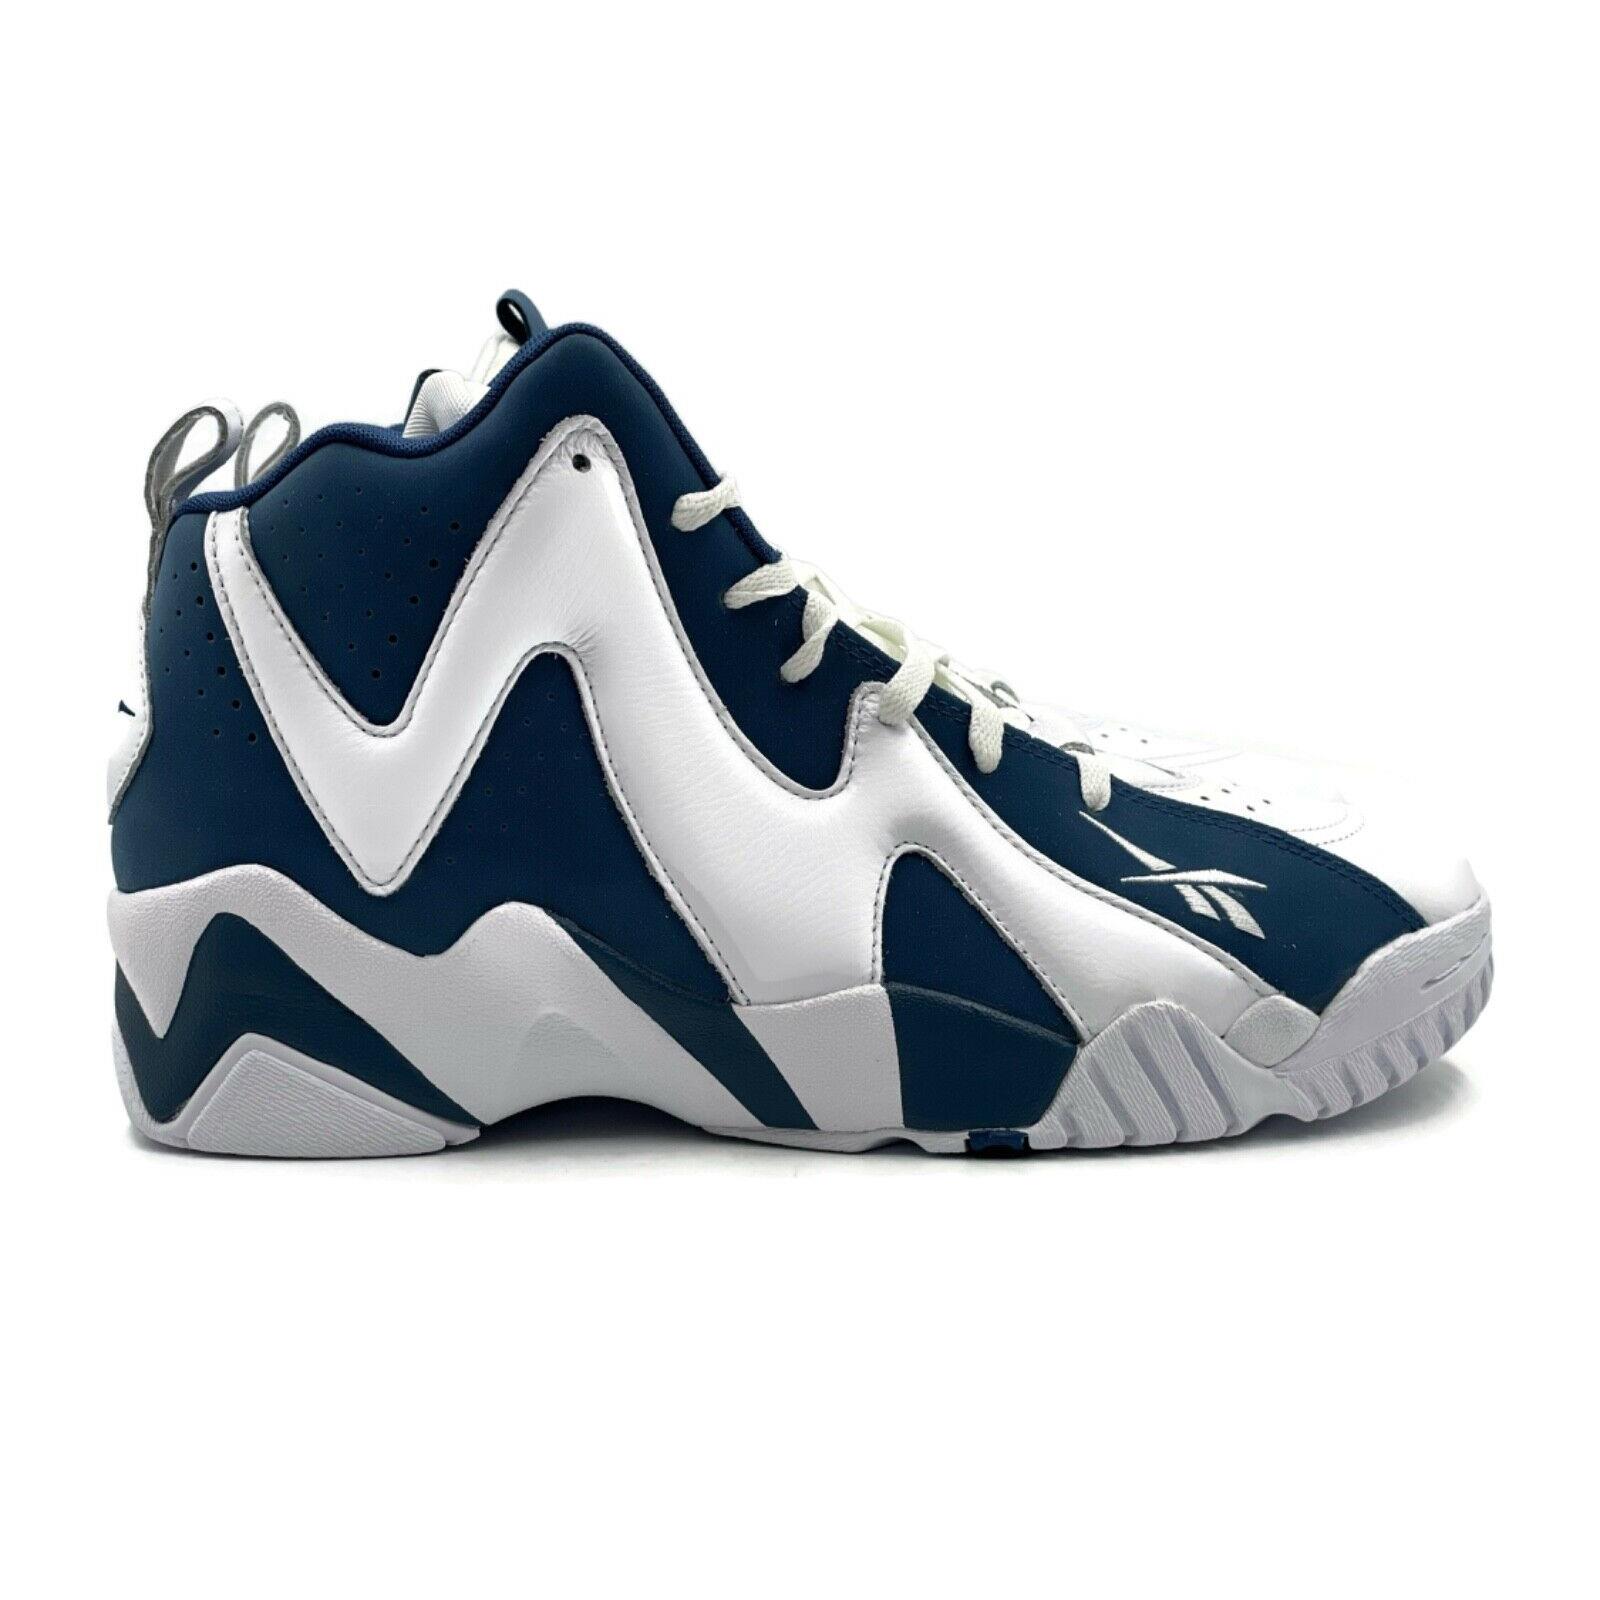 Reebok Kamikaze II 2 Mens Size 8.5 - 13 Basketball Shoe Blue White Sneaker Kemp